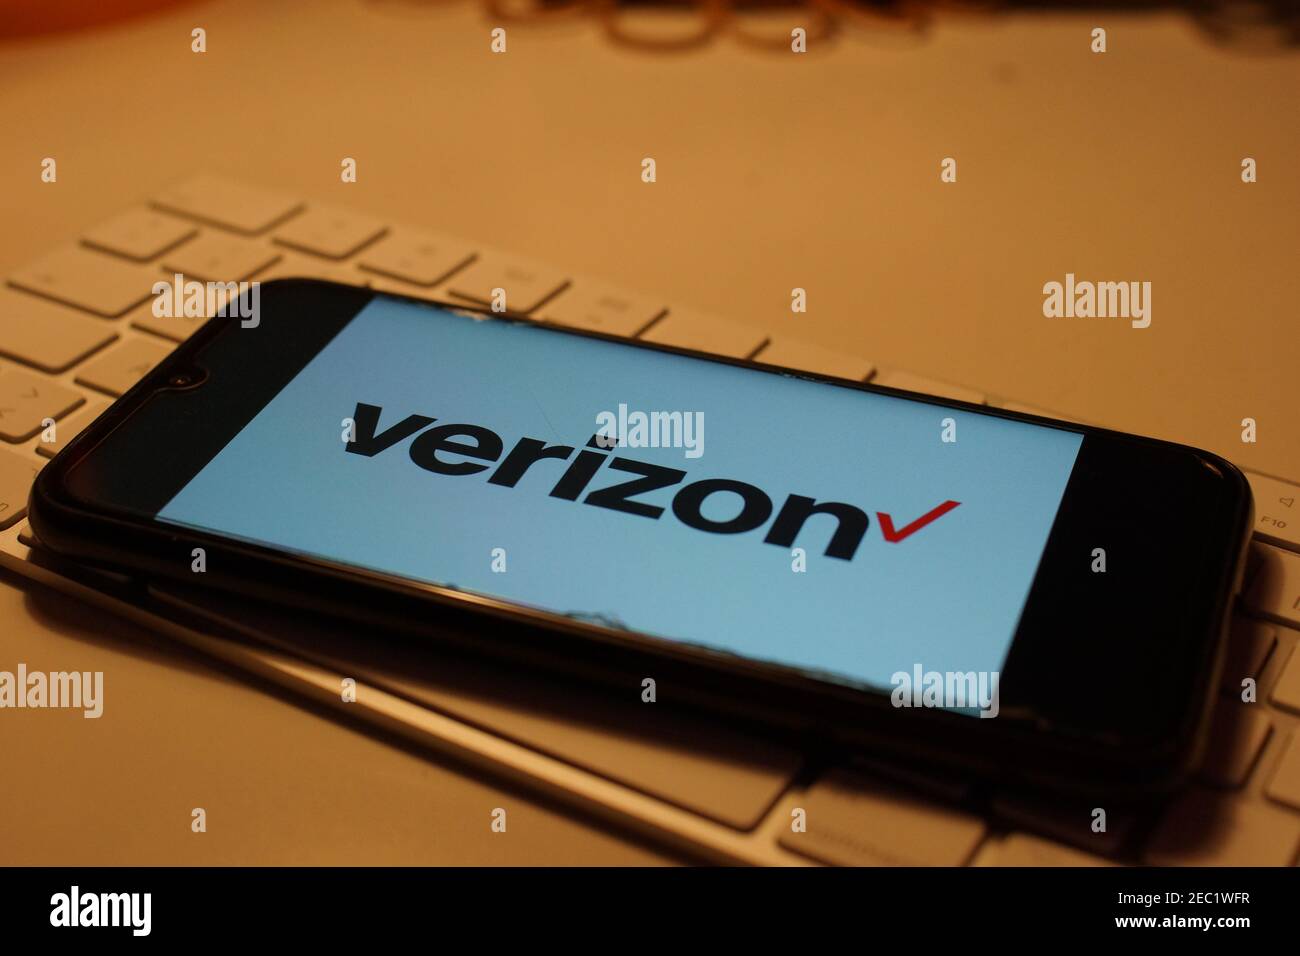 Smartphone with Verizon logo on computer keyboard Stock Photo